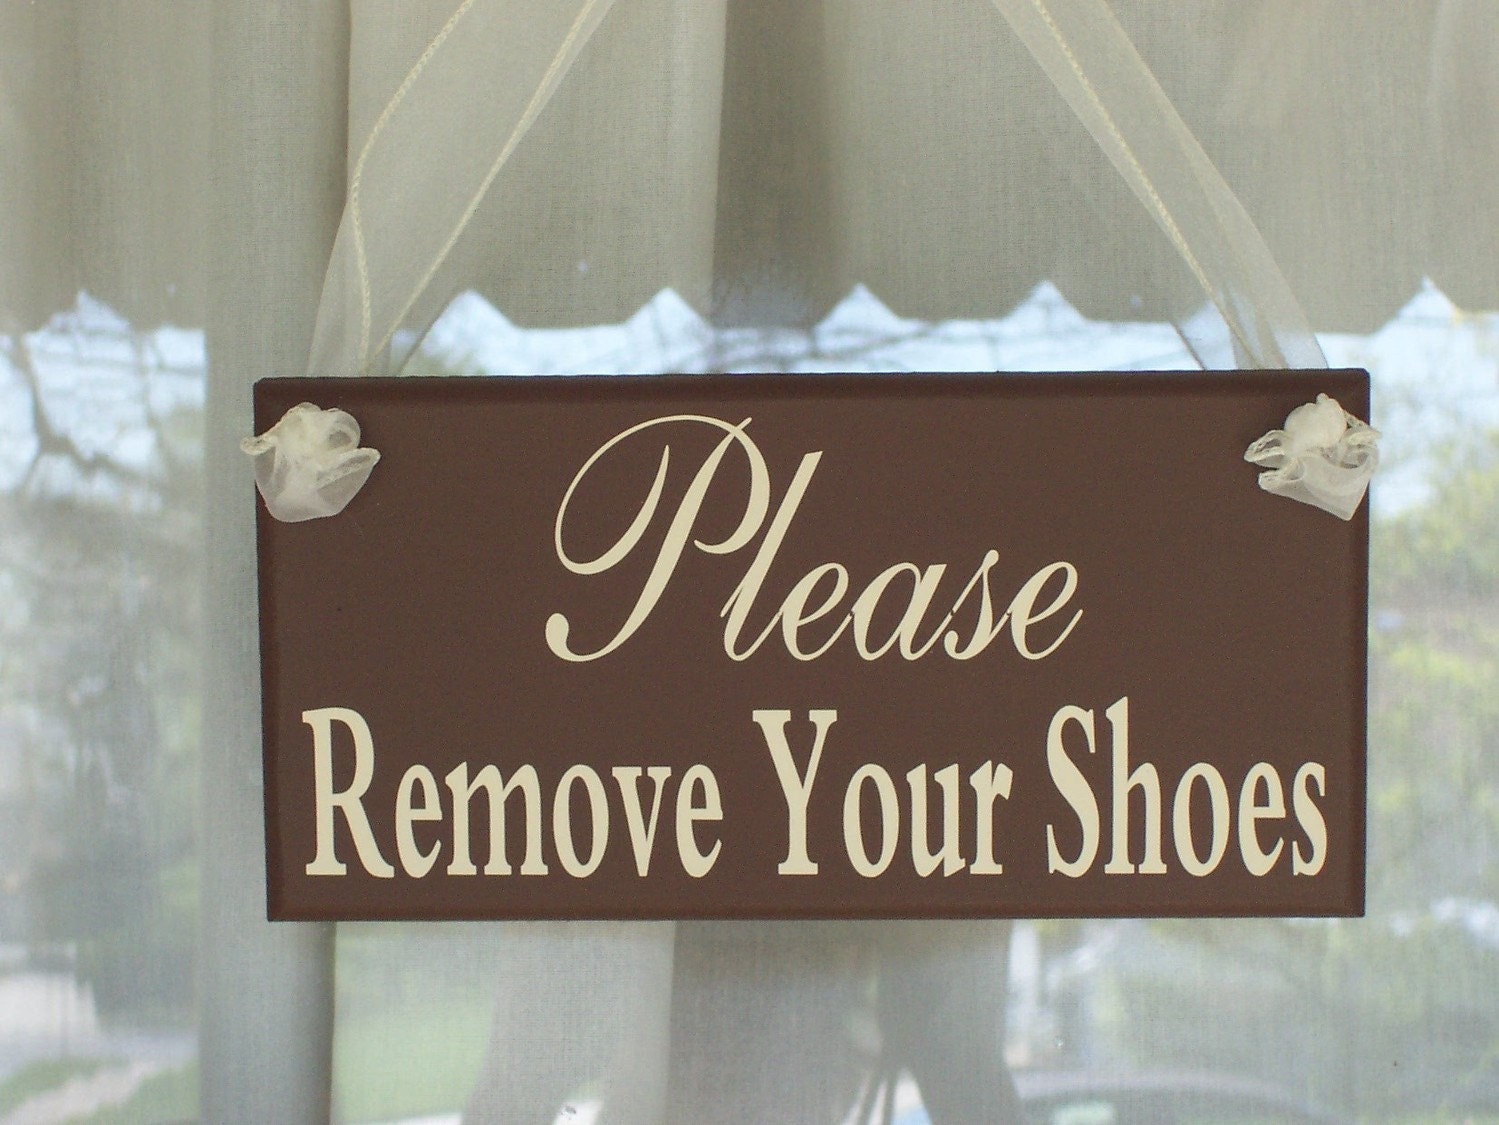 Please Remove Your Shoes - Wood Vinyl Sign